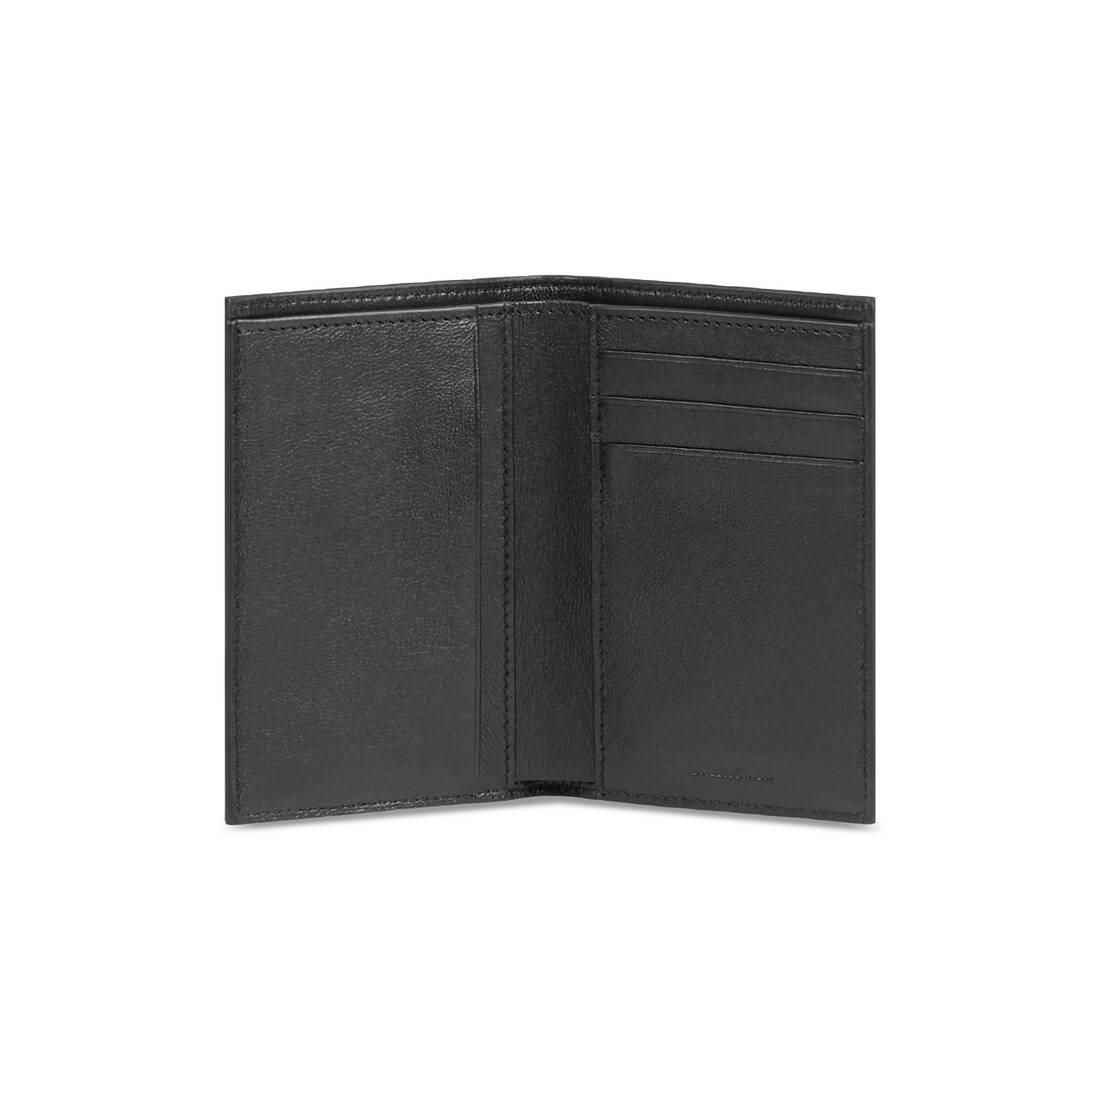 Men's Cash Vertical Bifolded Wallet in Black/white - 3